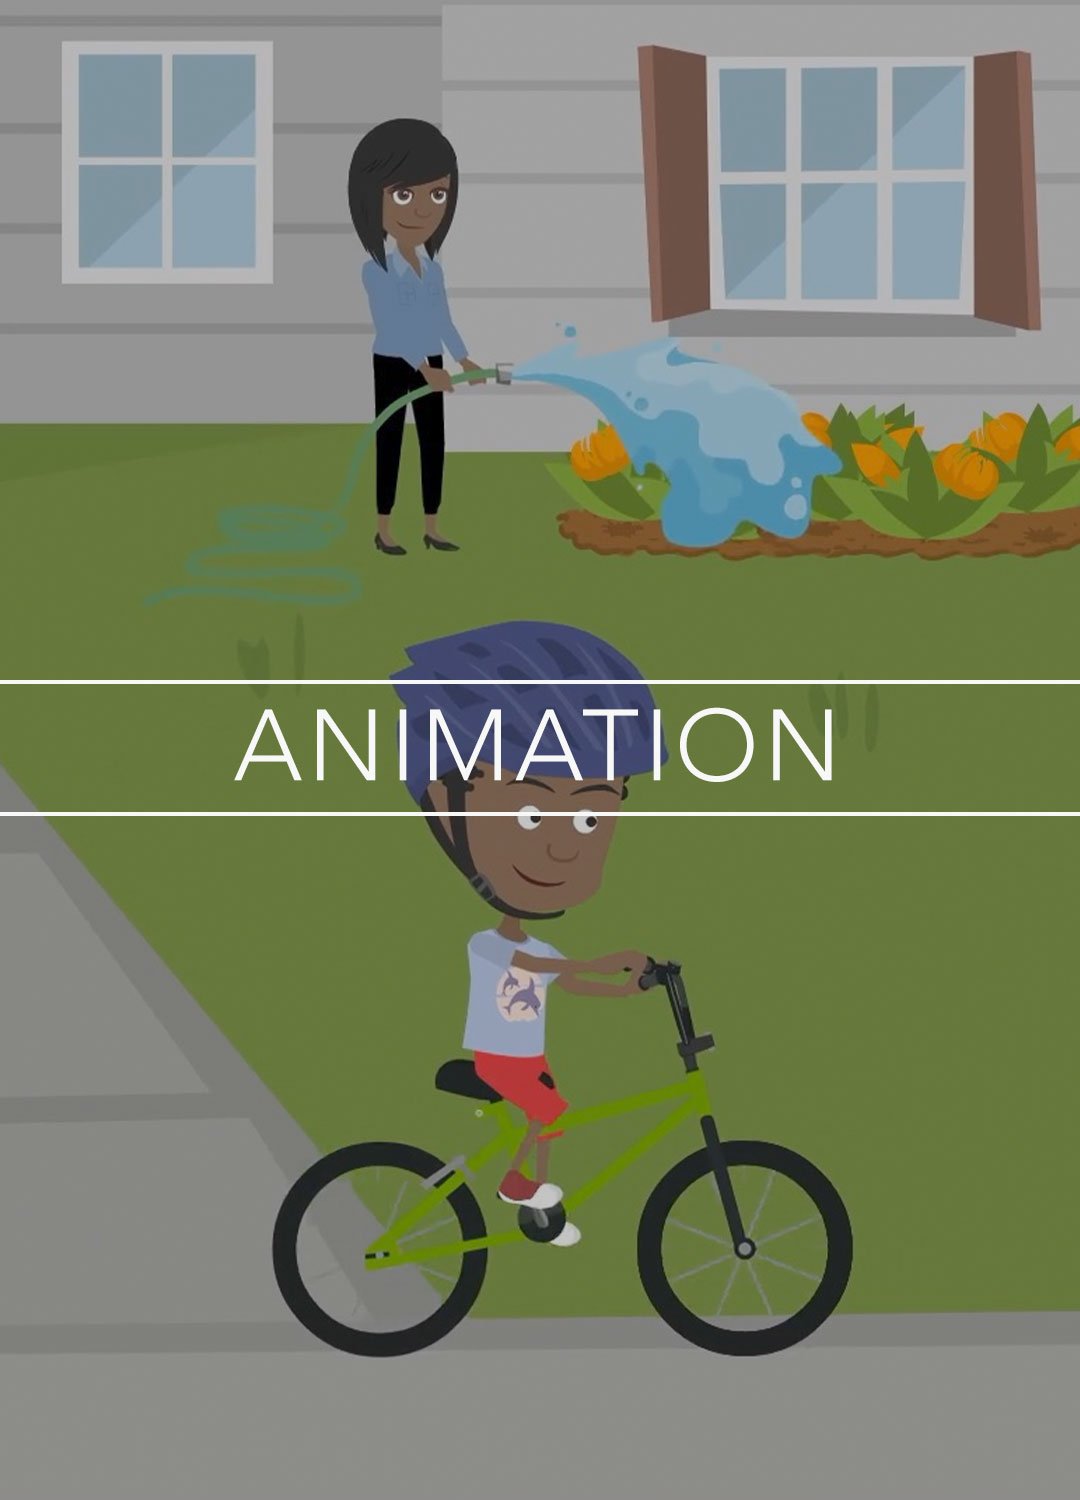 Animation.jpg